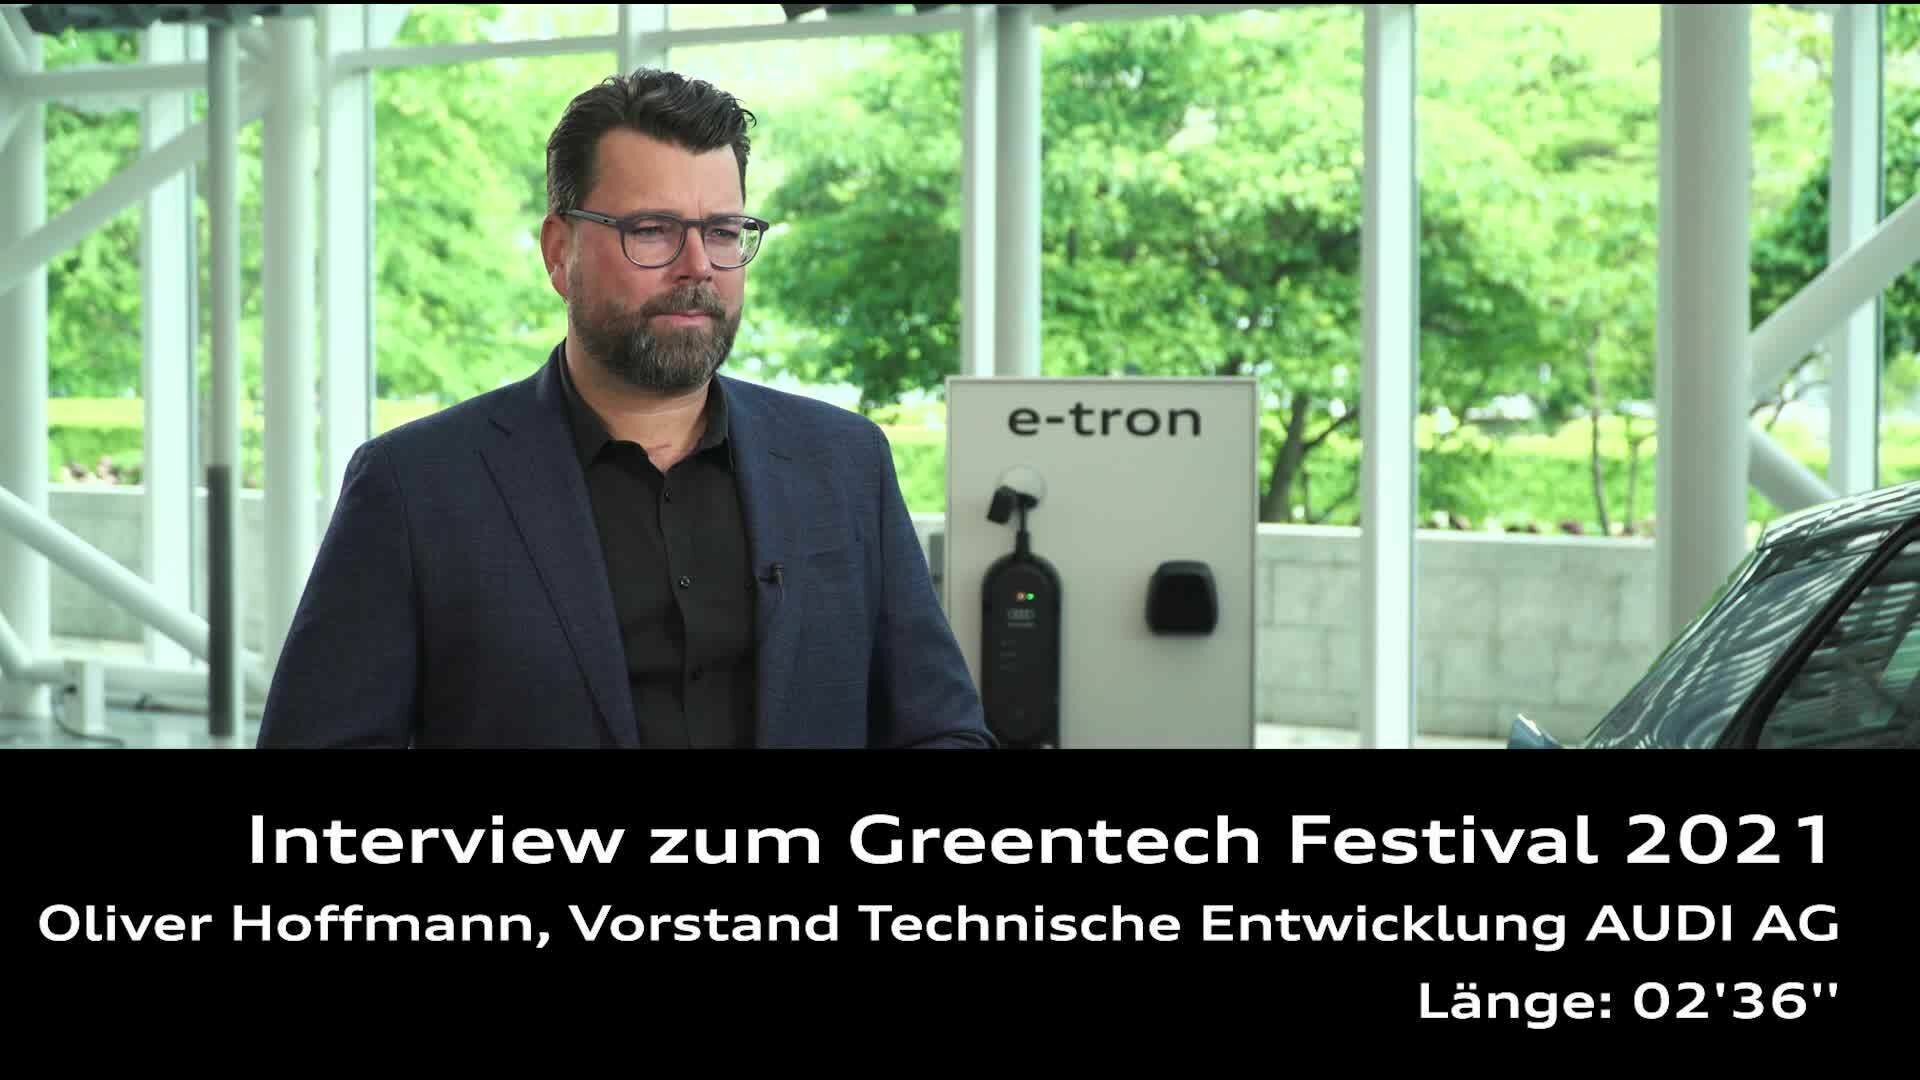 Interview zum Greentech Festival 2021 mit Oliver Hoffmann